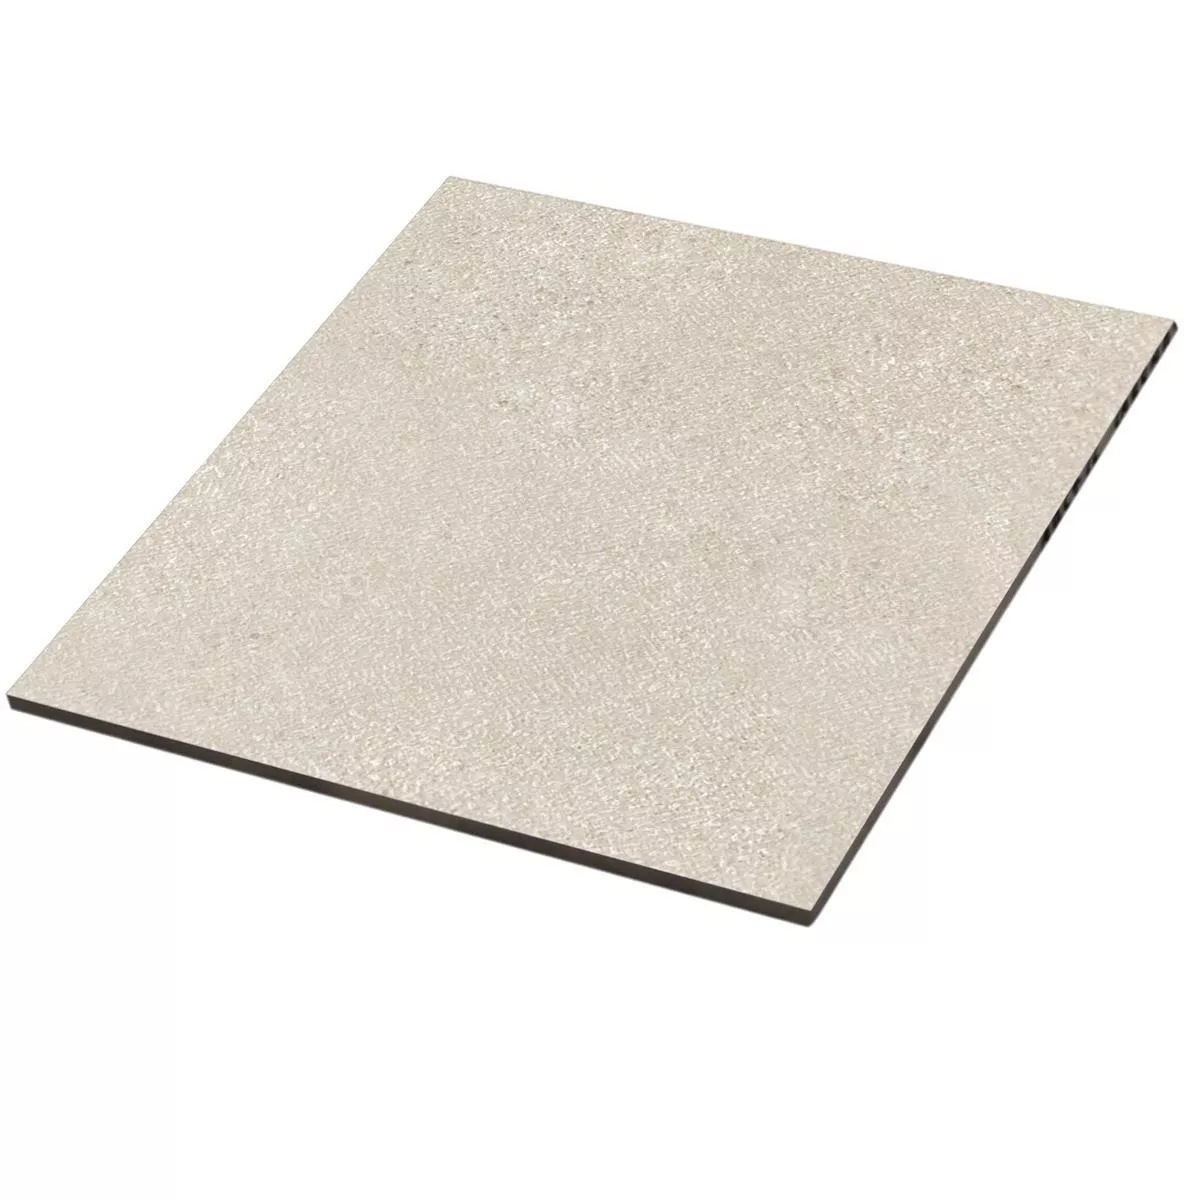 Sample Floor Tiles Galilea Unglazed R10B Beige 30x30cm